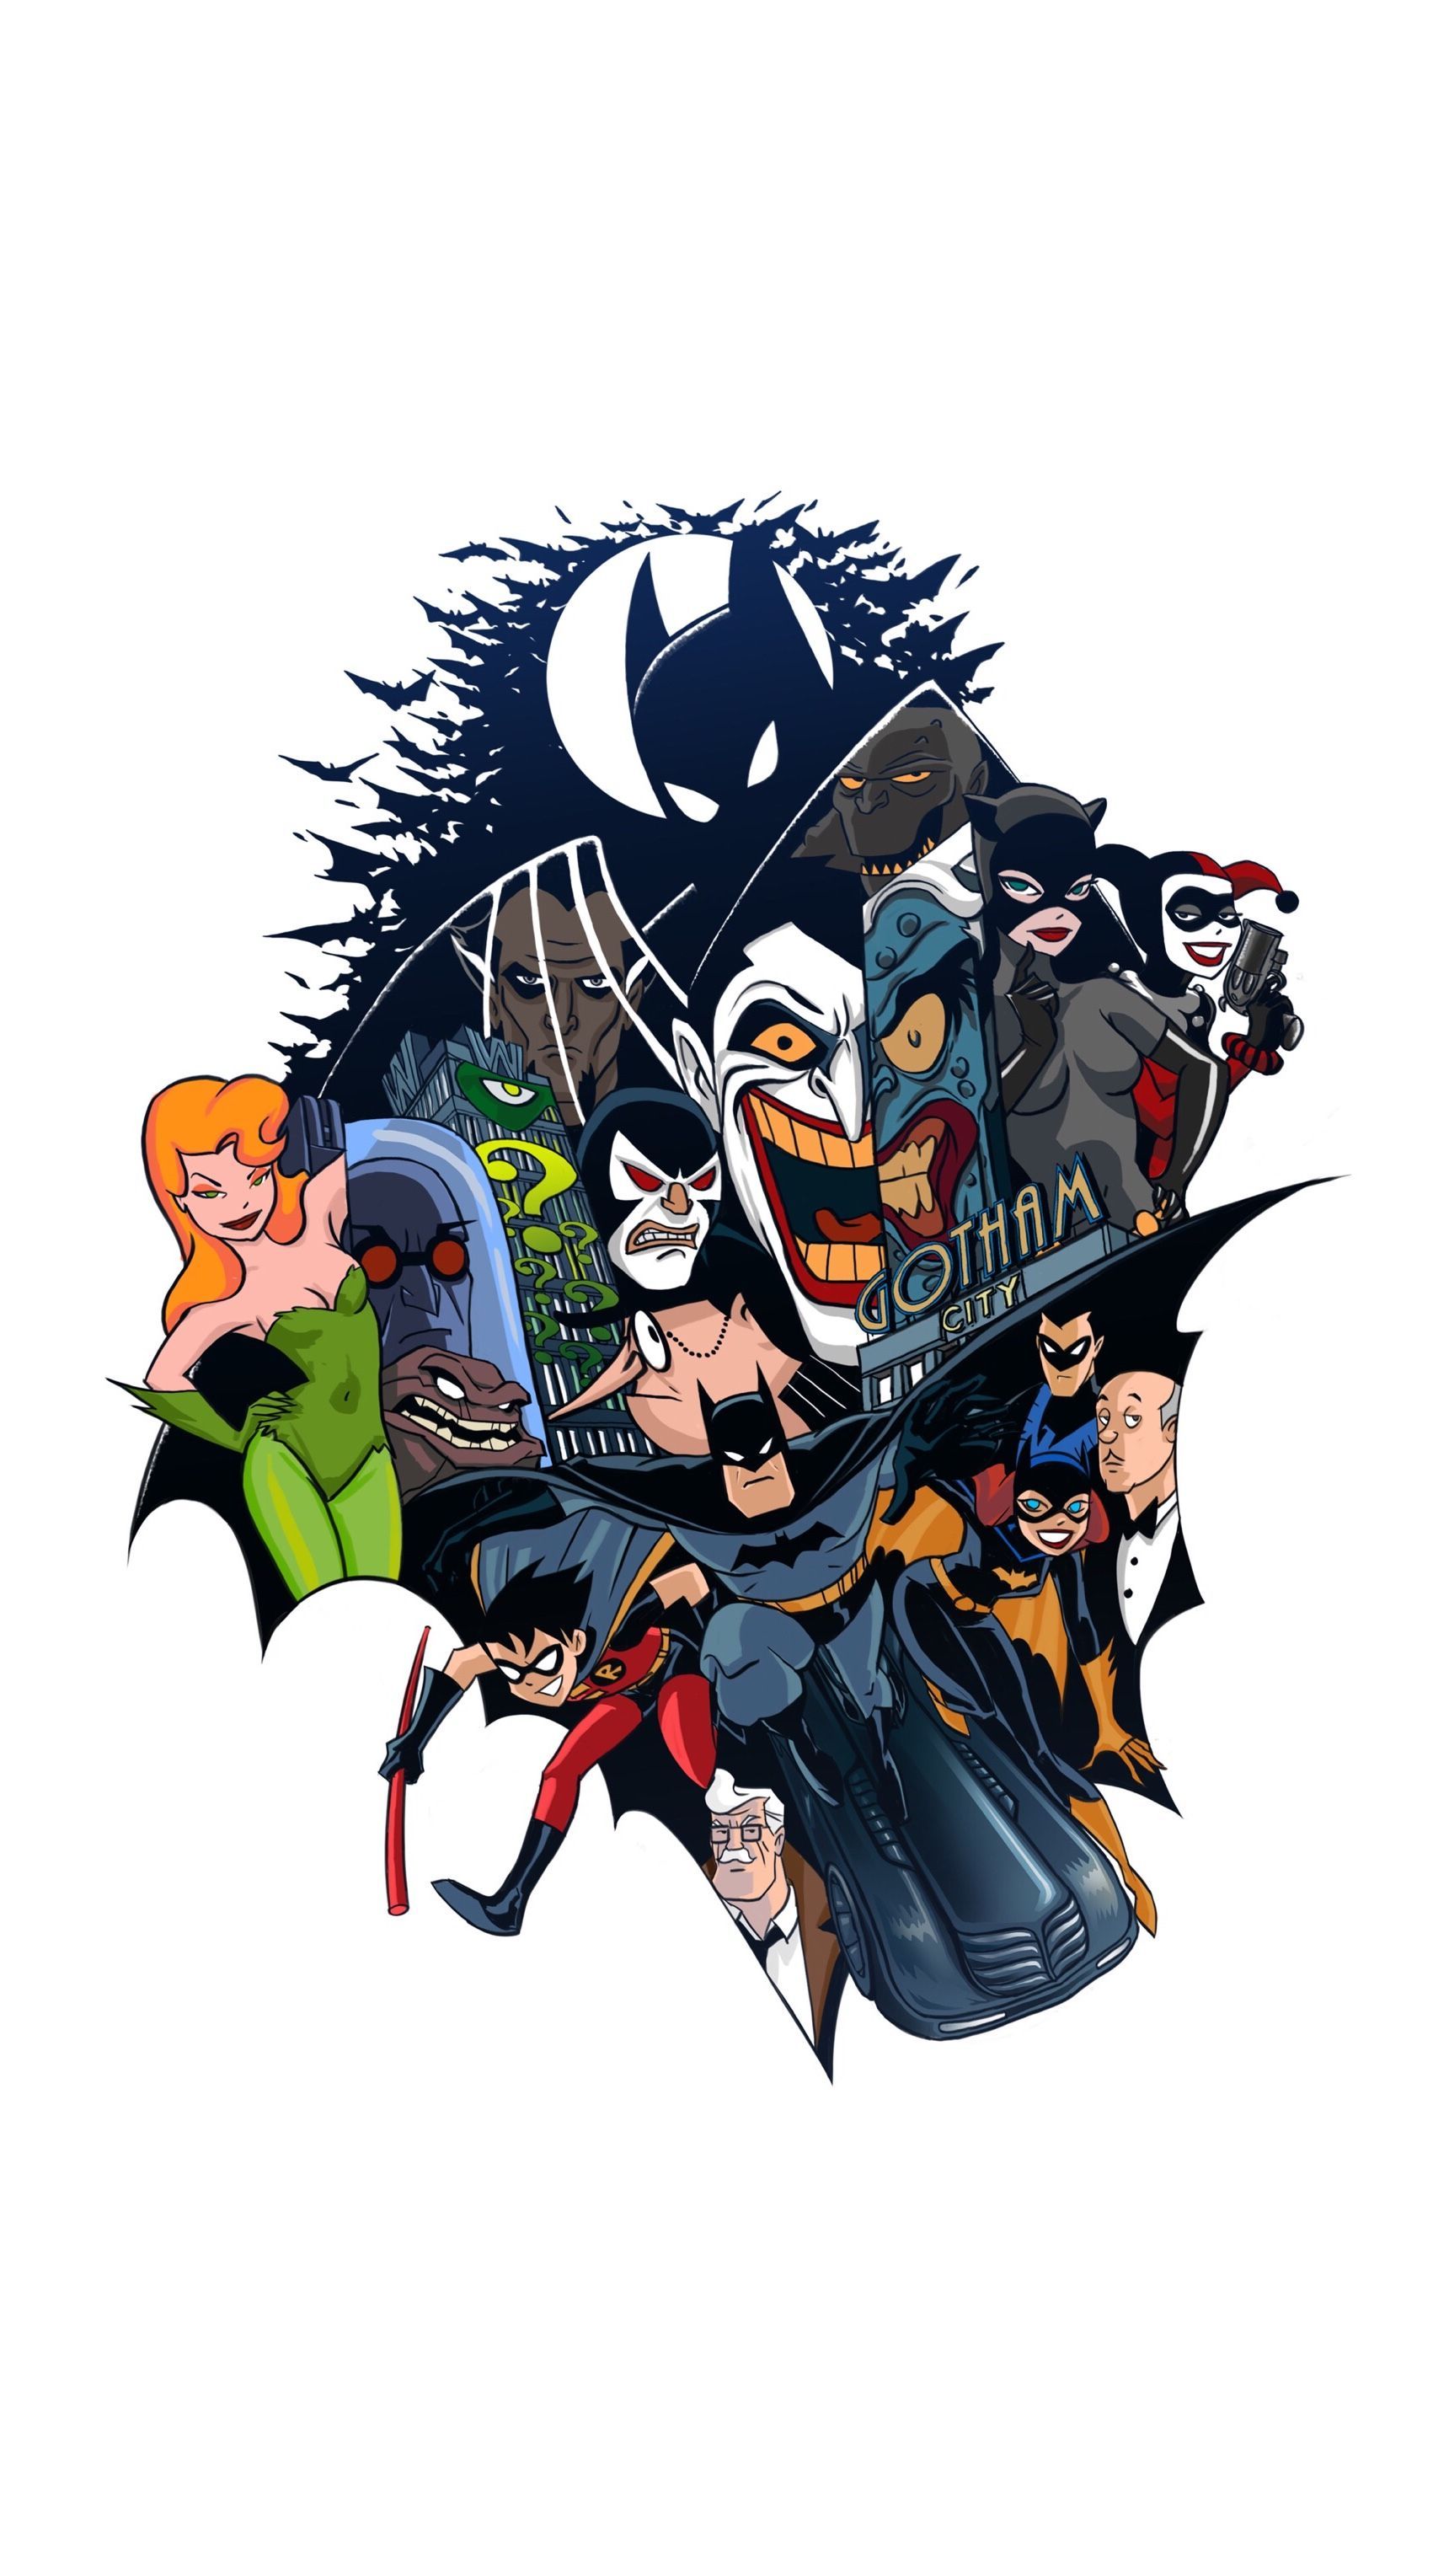 Superheroes DC comics art picture 1080x1920 iPhone 8766S Plus wallpaper  background picture image